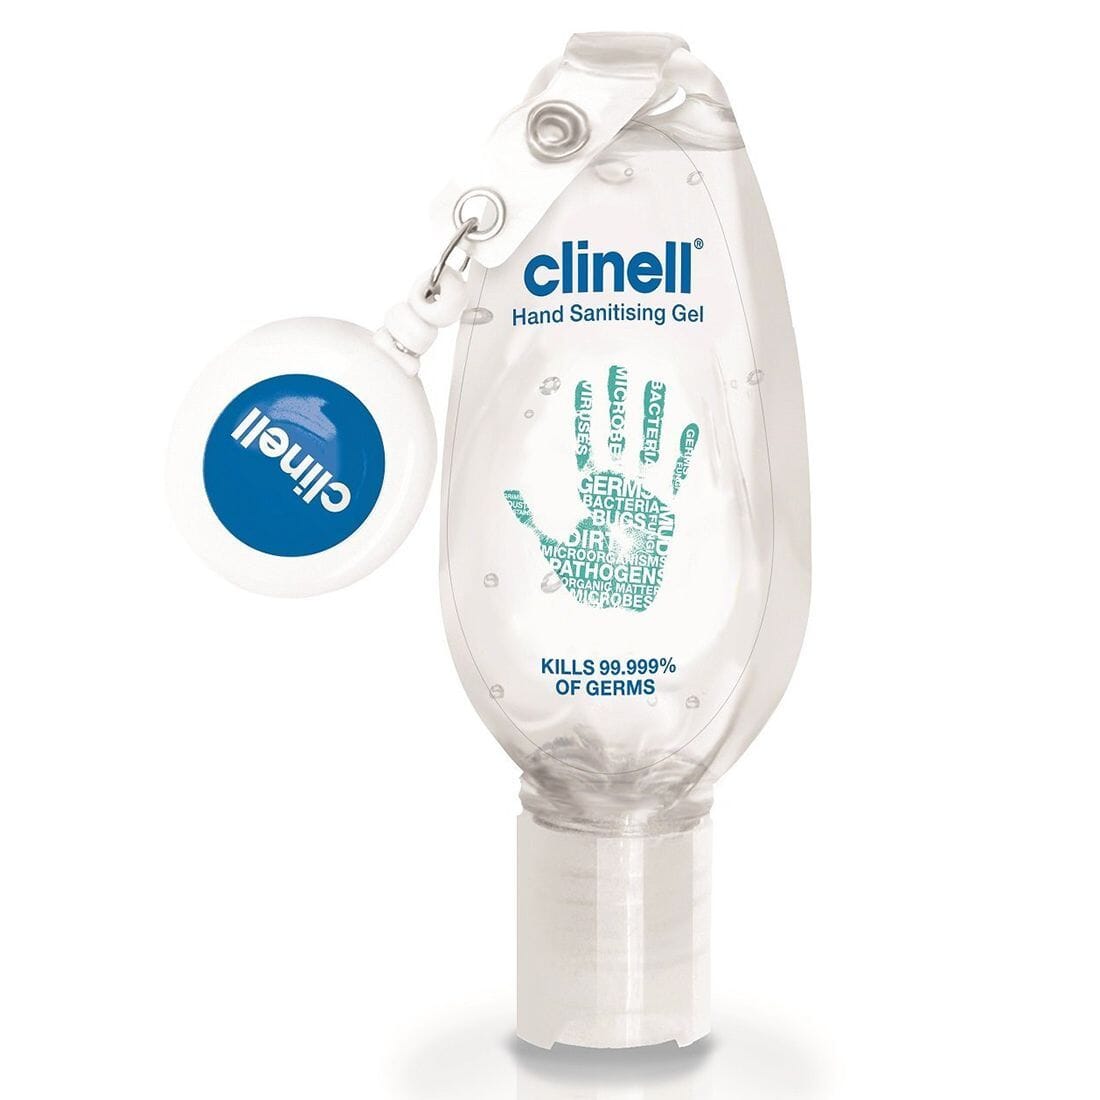 View Clinell Hand Sanitising Gel 50ml Dispenser information